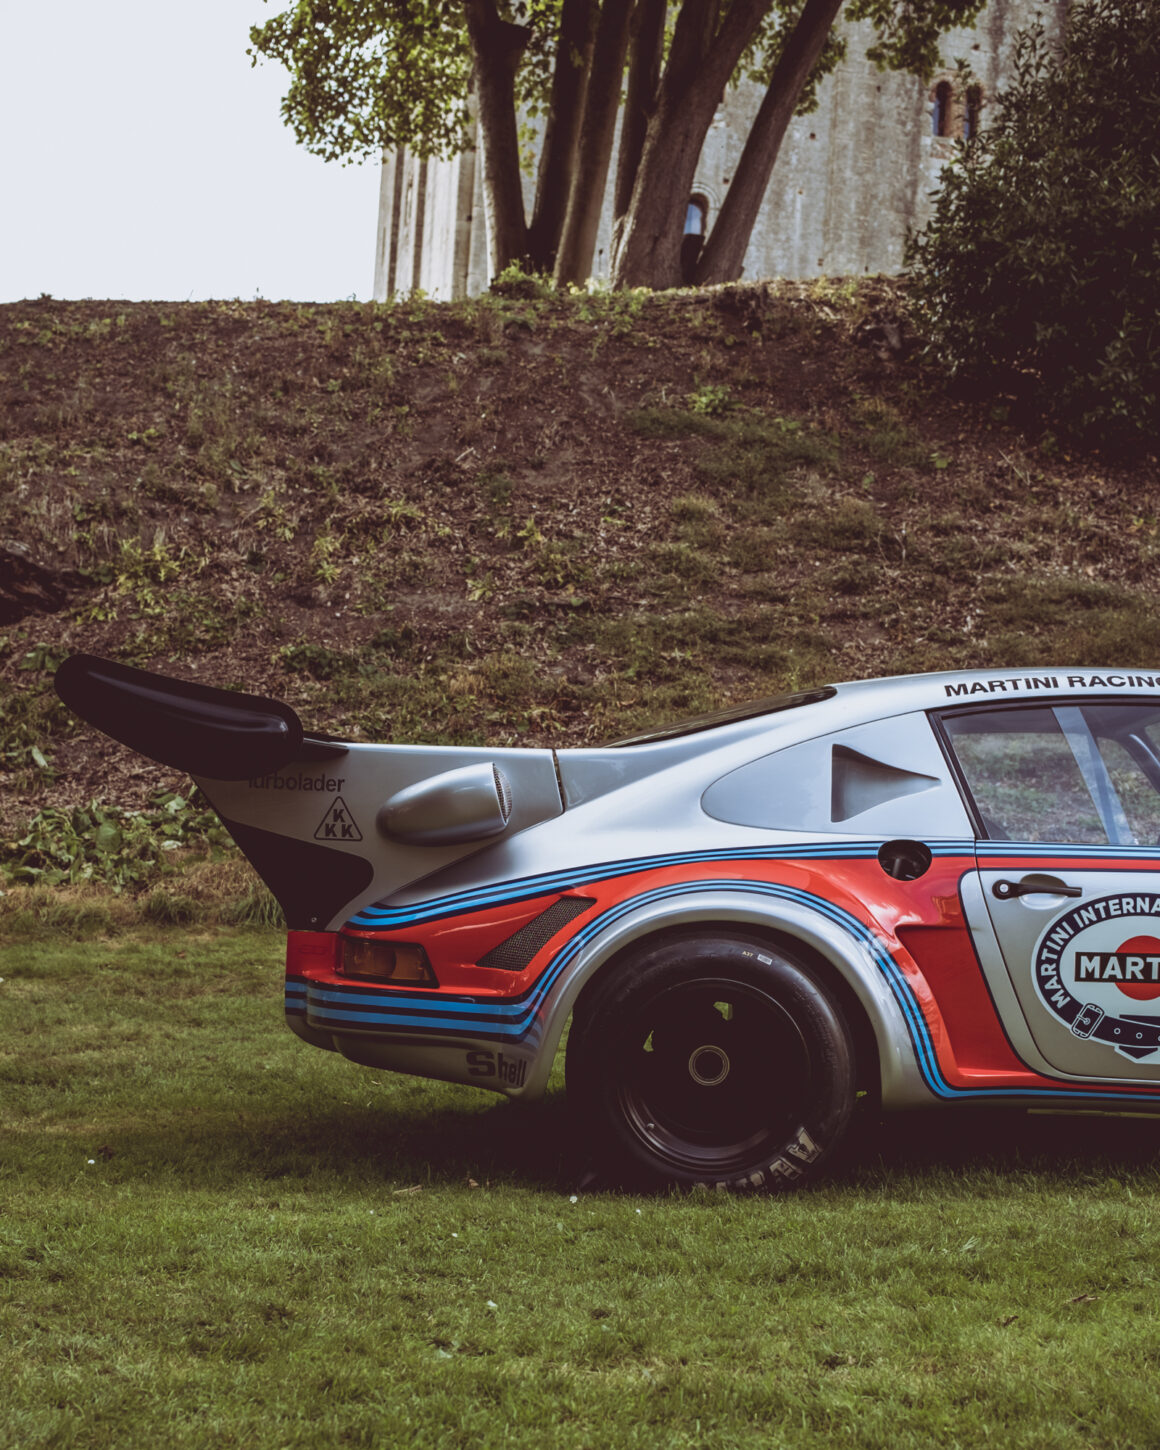 Porsche Classics at the Castle 2021